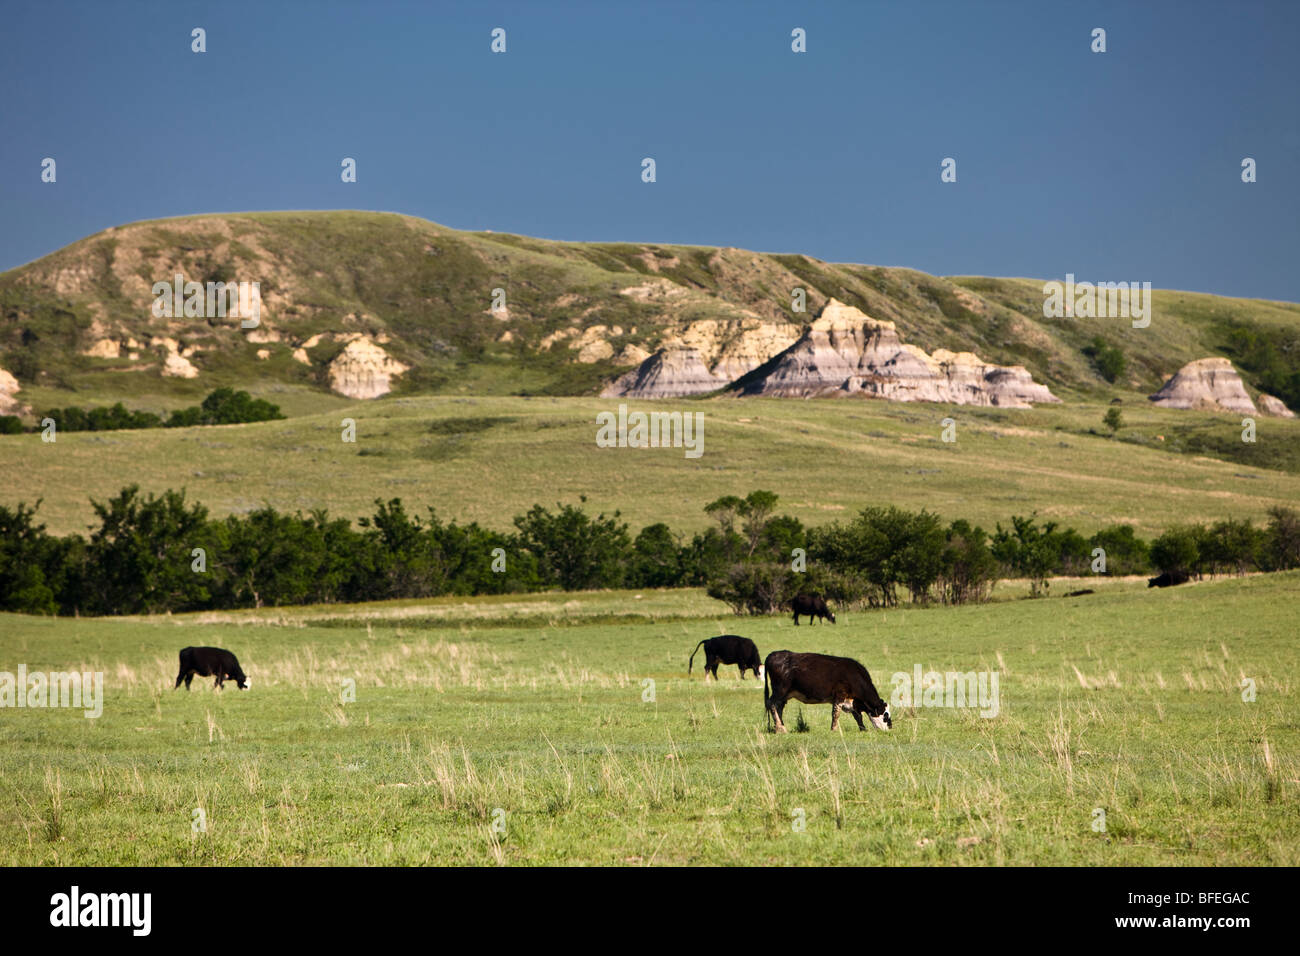 Cows grazing in a field in the Big Muddy Badlands region of southern Saskatchewan, Canada Stock Photo